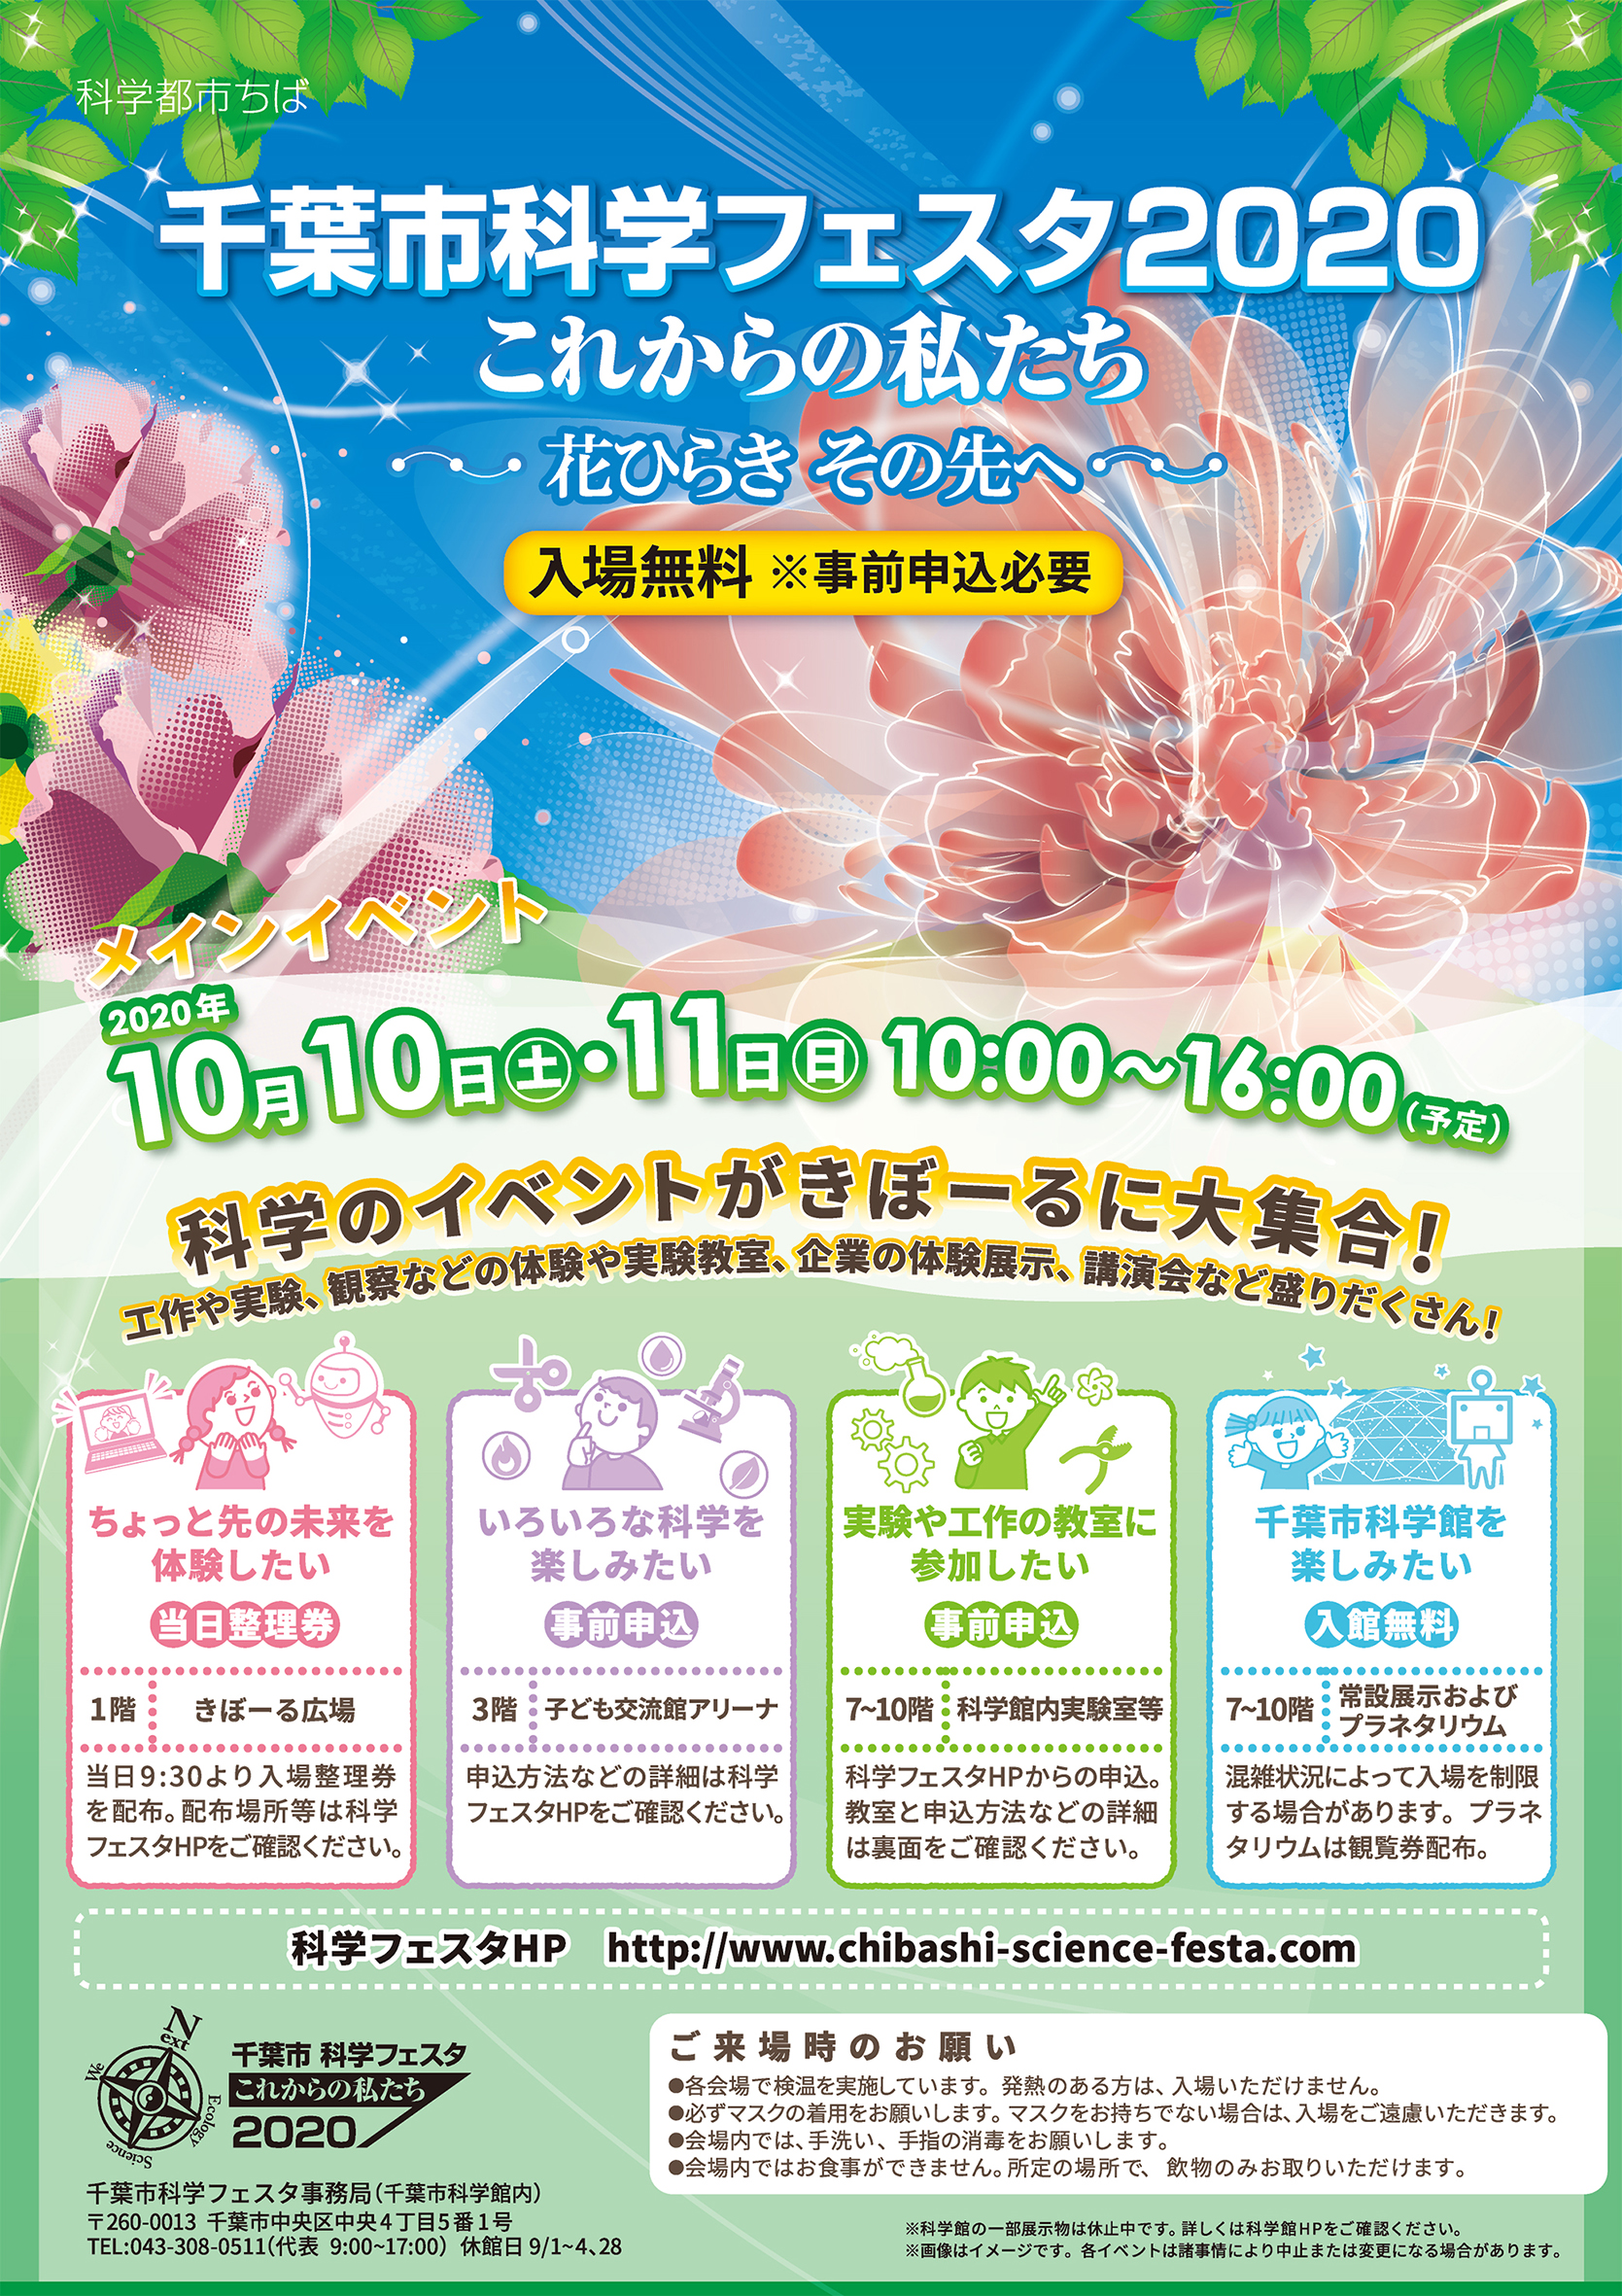 http://www.chibashi-science-festa.com/news/festa2020/2020festa_flyer_omote.jpg